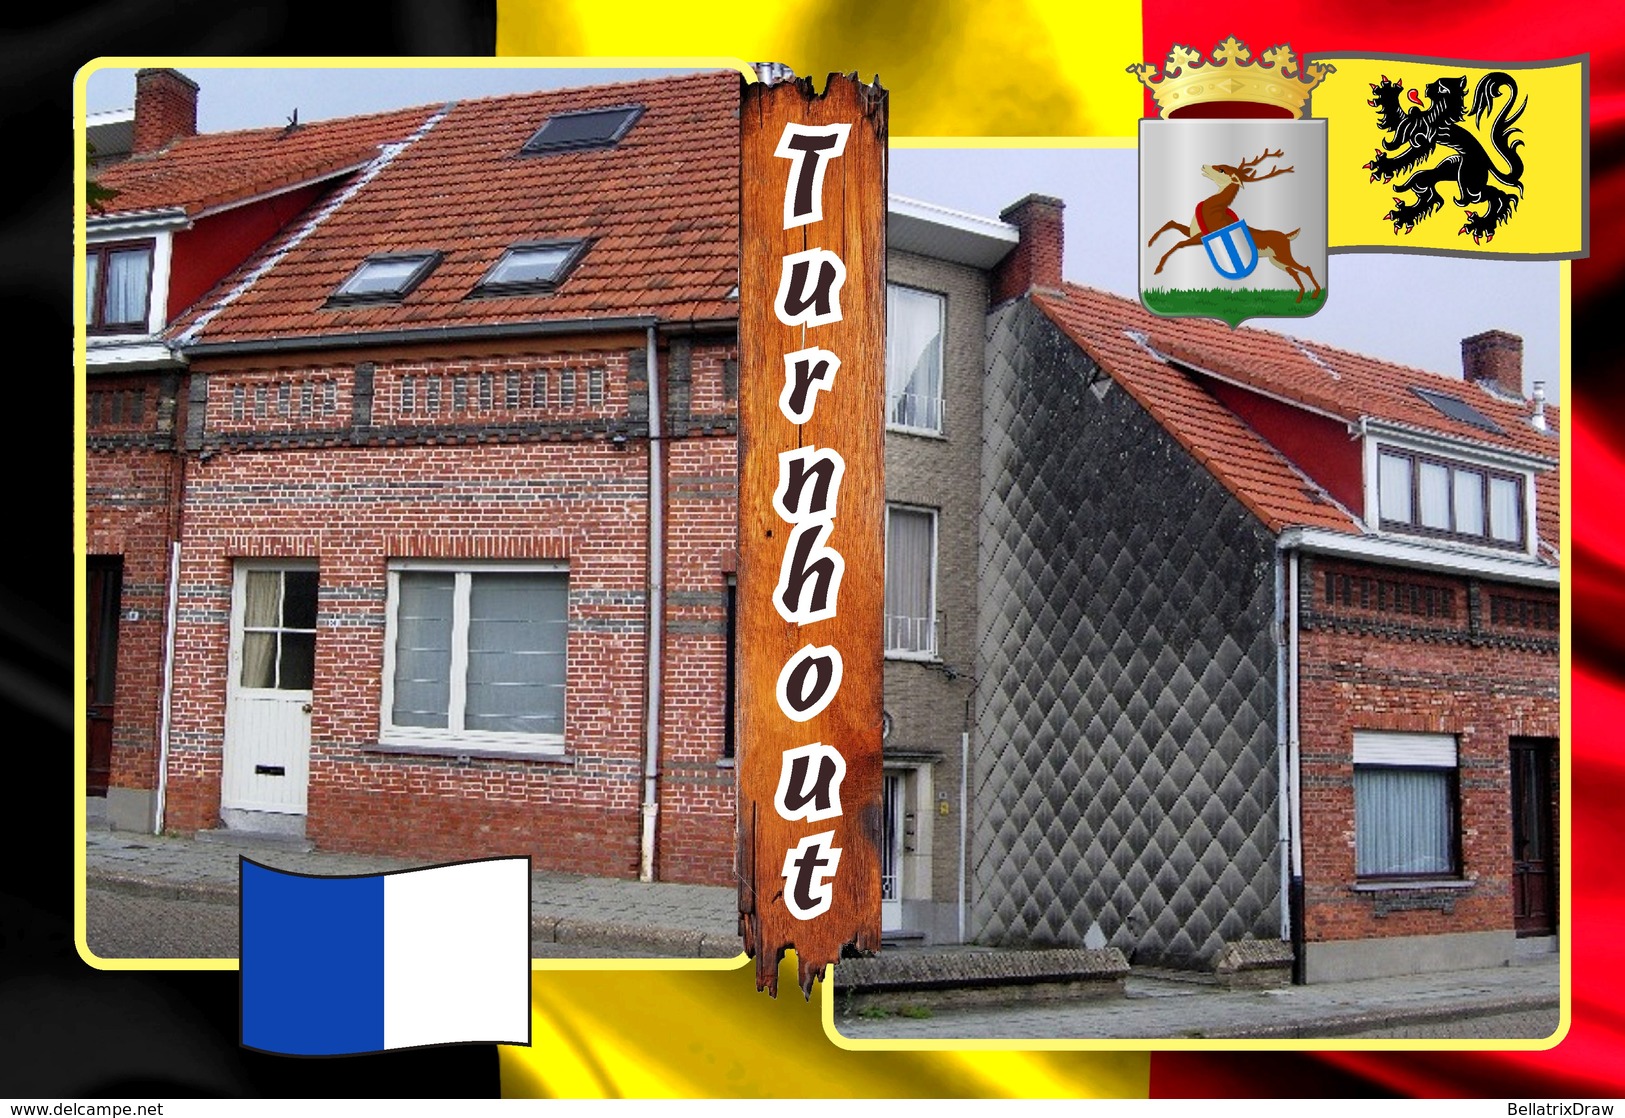 Postcards, REPRODUCTION, Municipalities of Belgium, Turnhout, duplex 295 - 345 = 51 pcs.